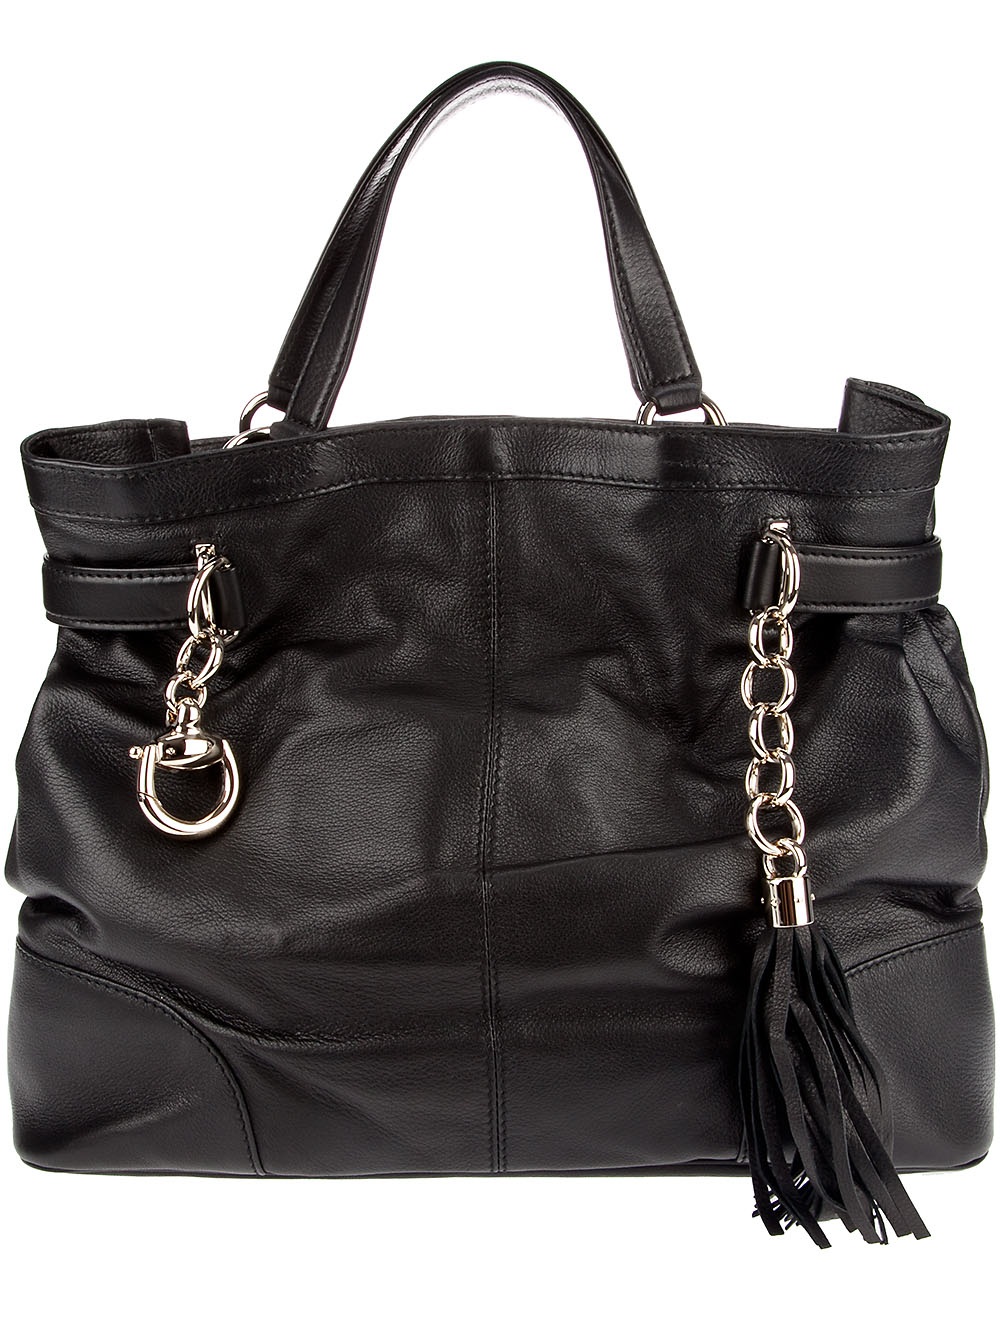 Gucci Chain Detail Bag in Black | Lyst